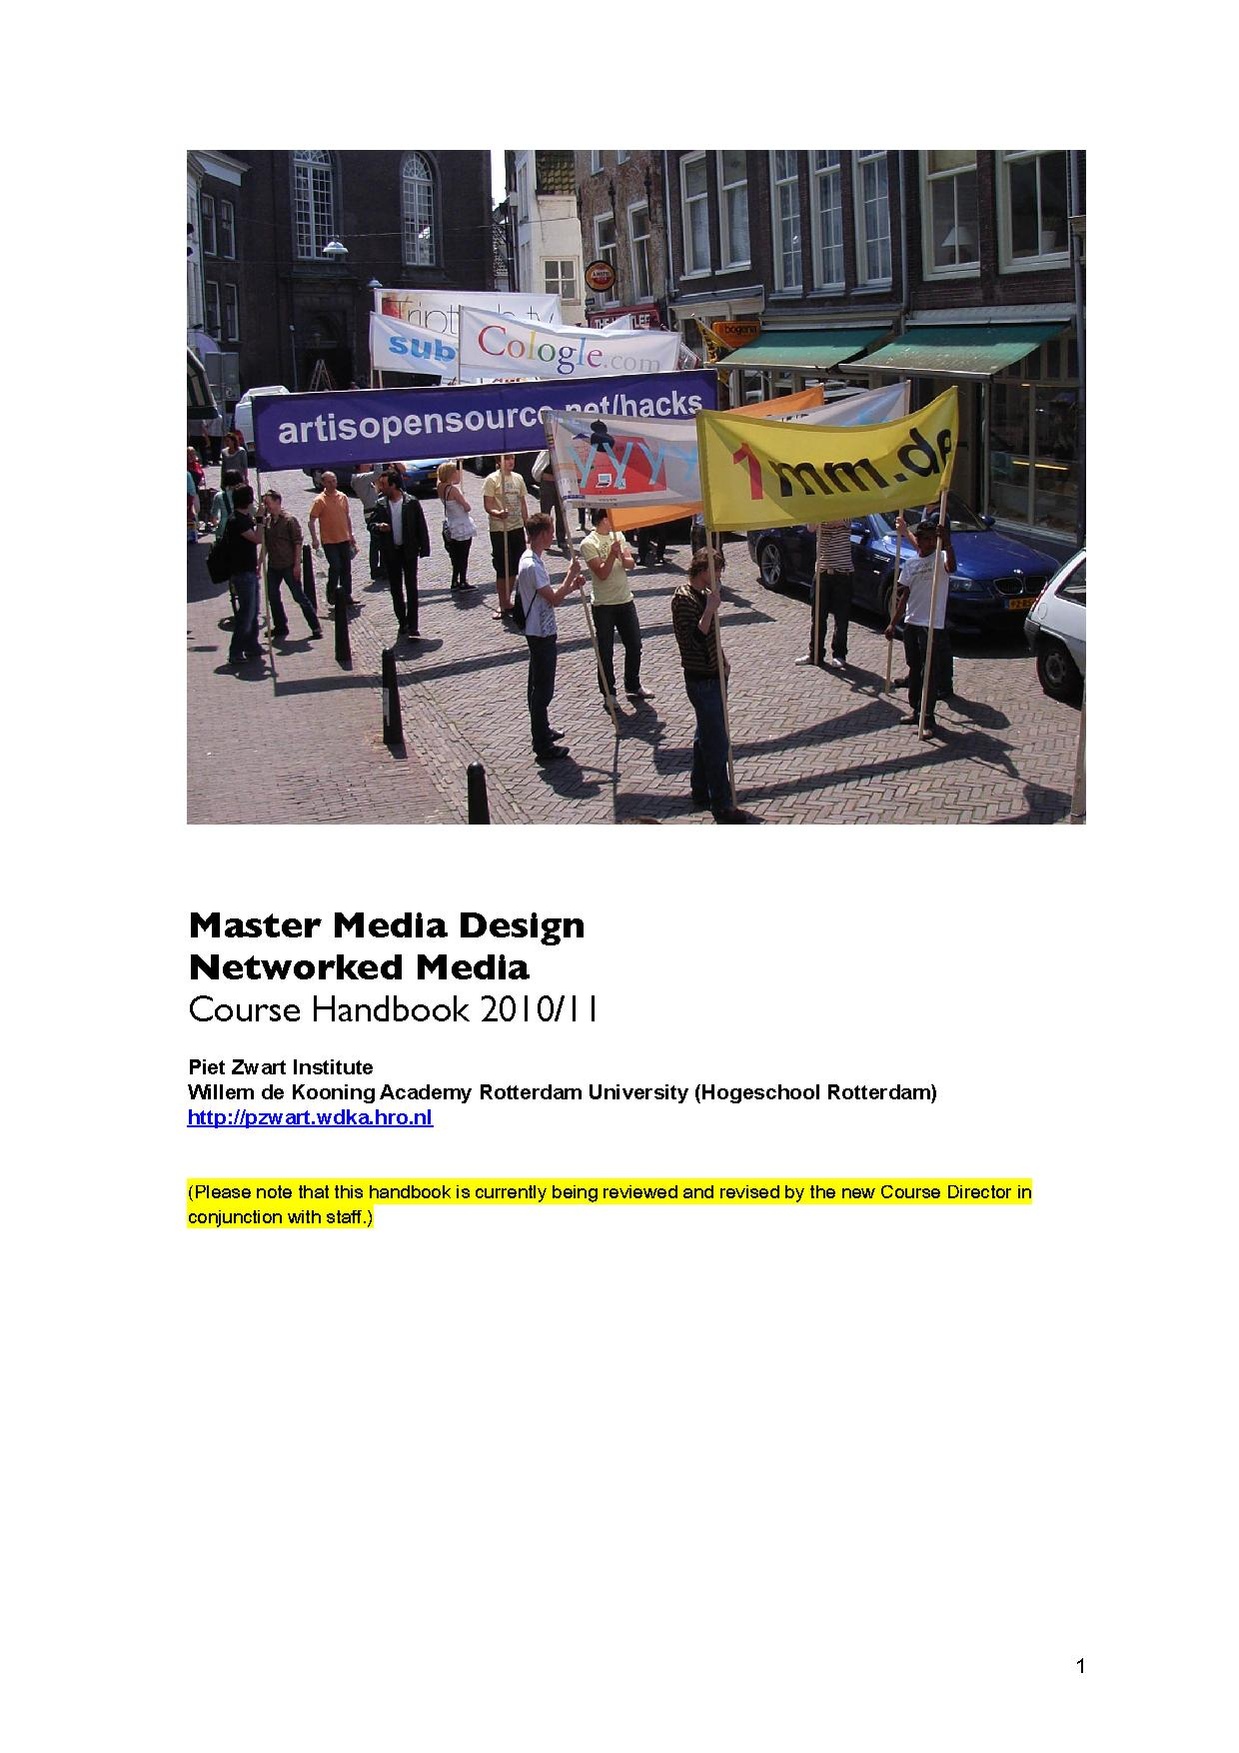 Course Handbook 2010 11.pdf